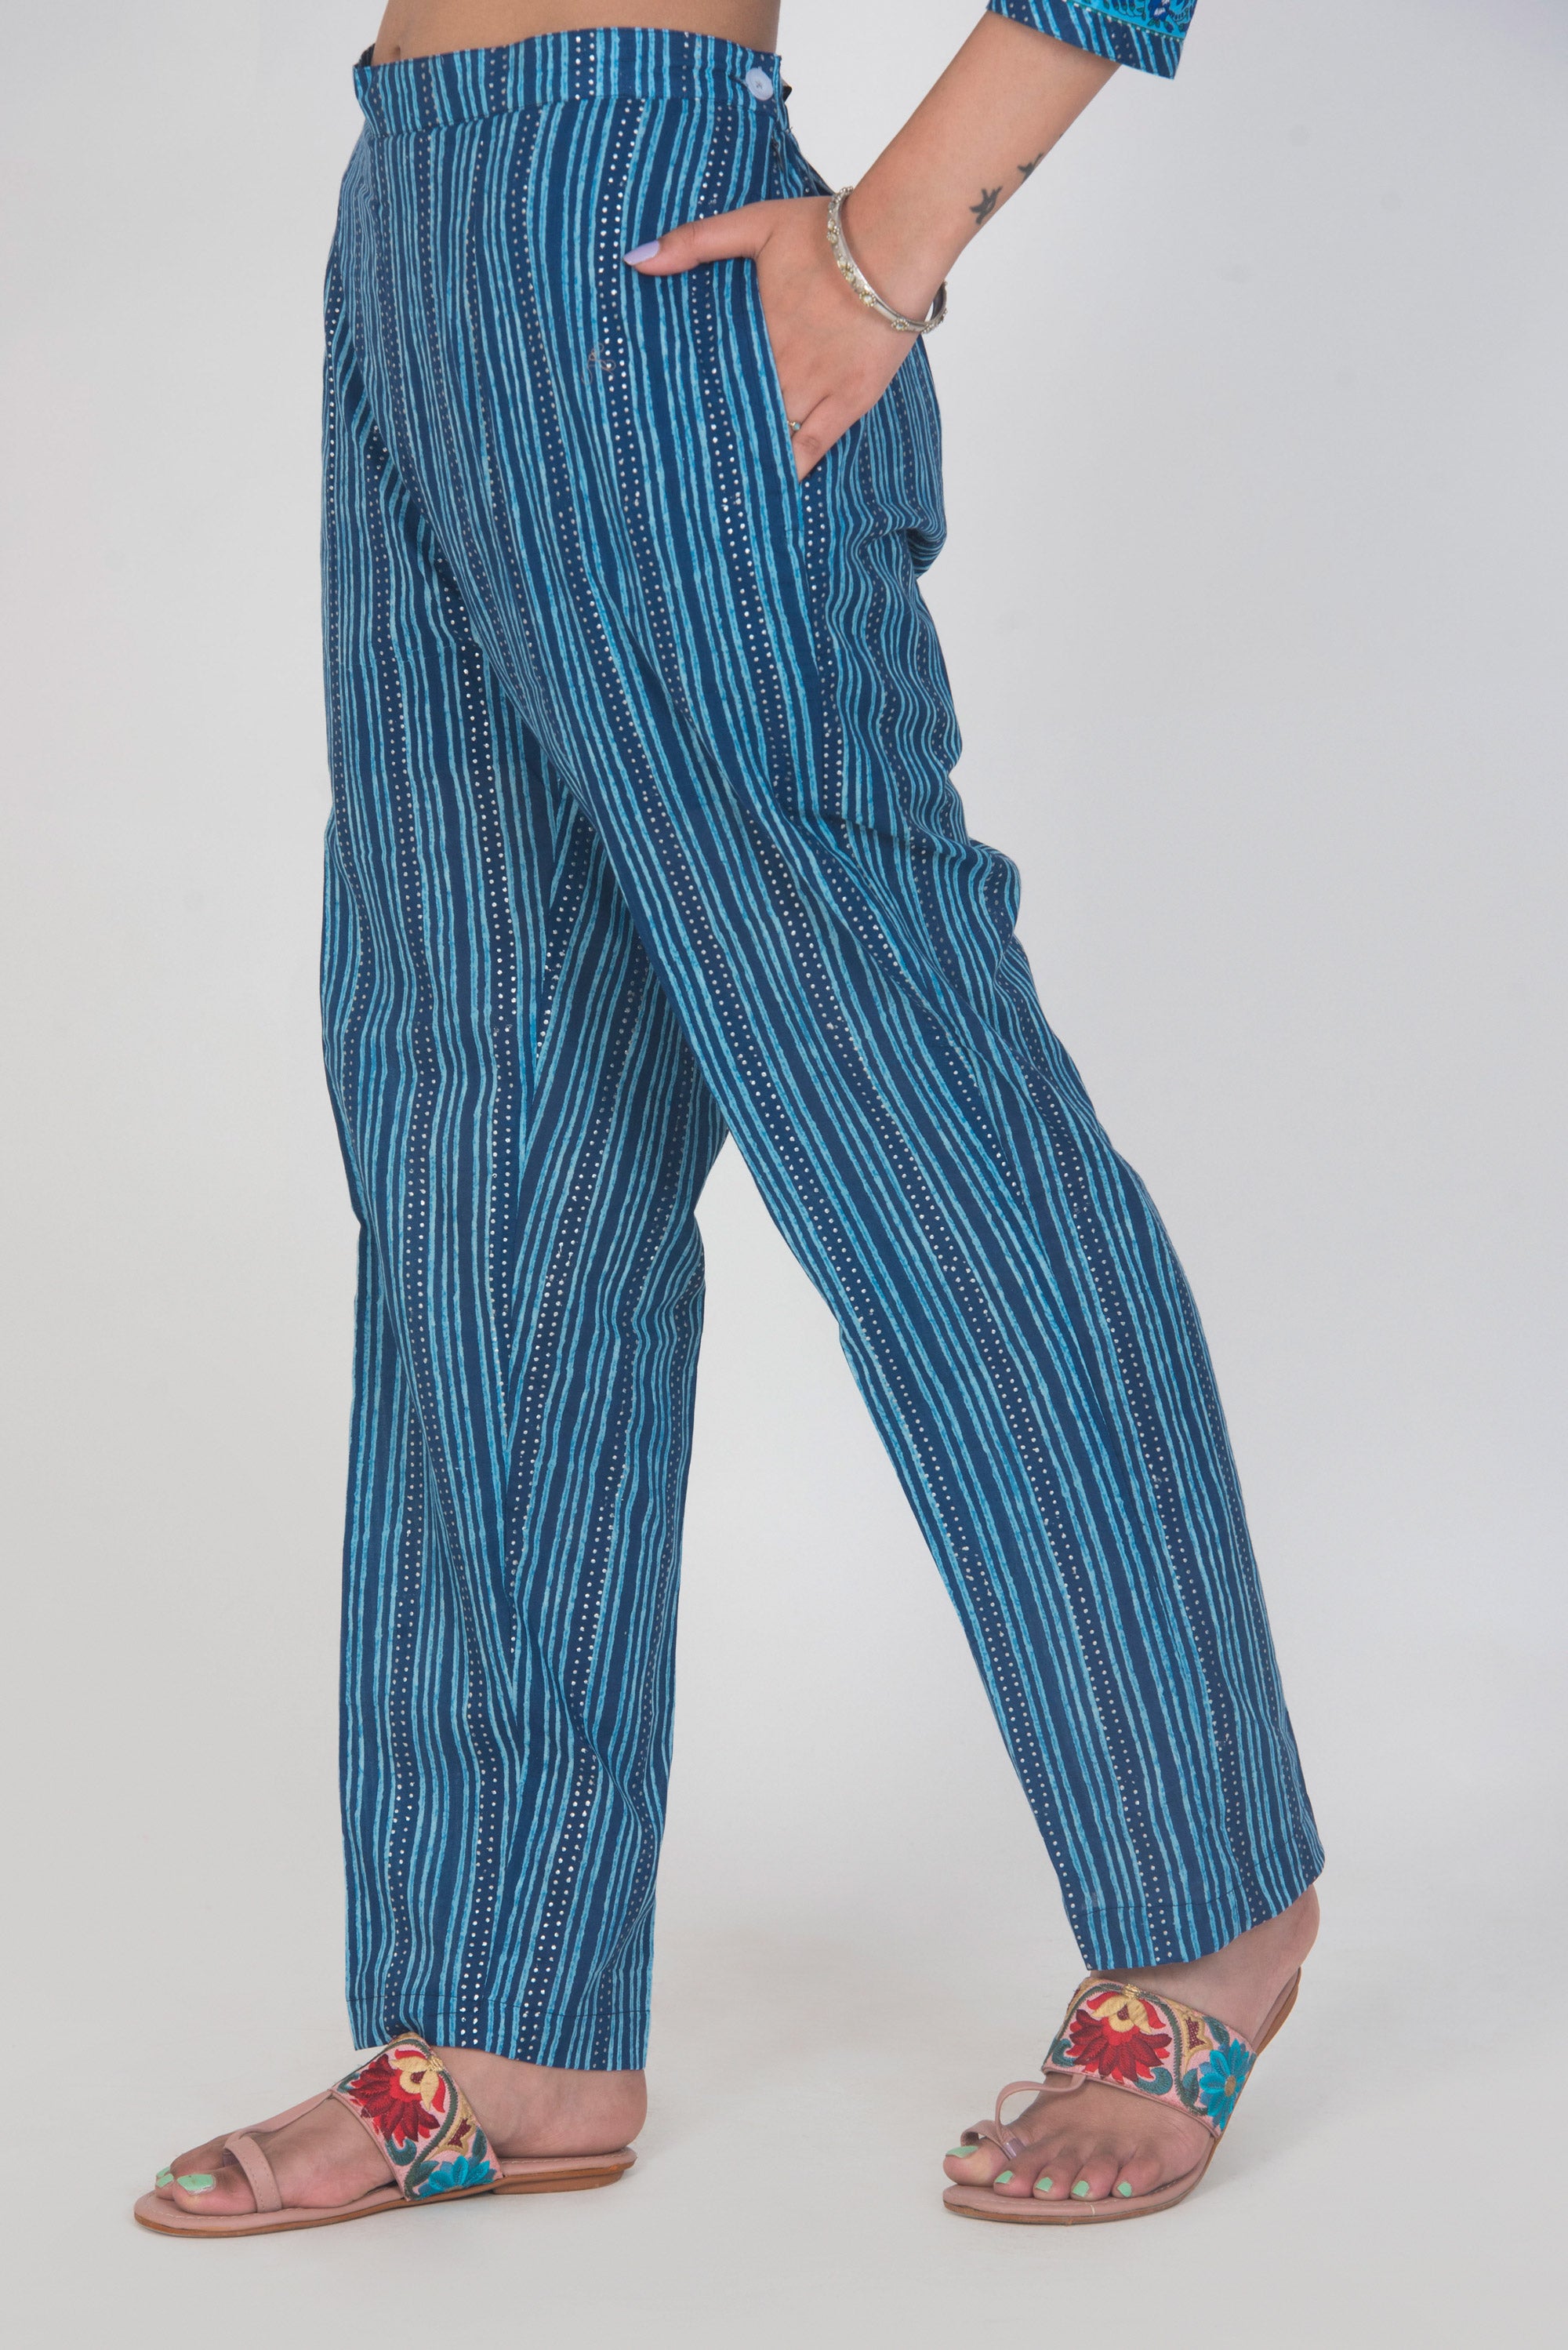 Buy Vero Moda Black & White Striped High Rise Pants for Women Online @ Tata  CLiQ